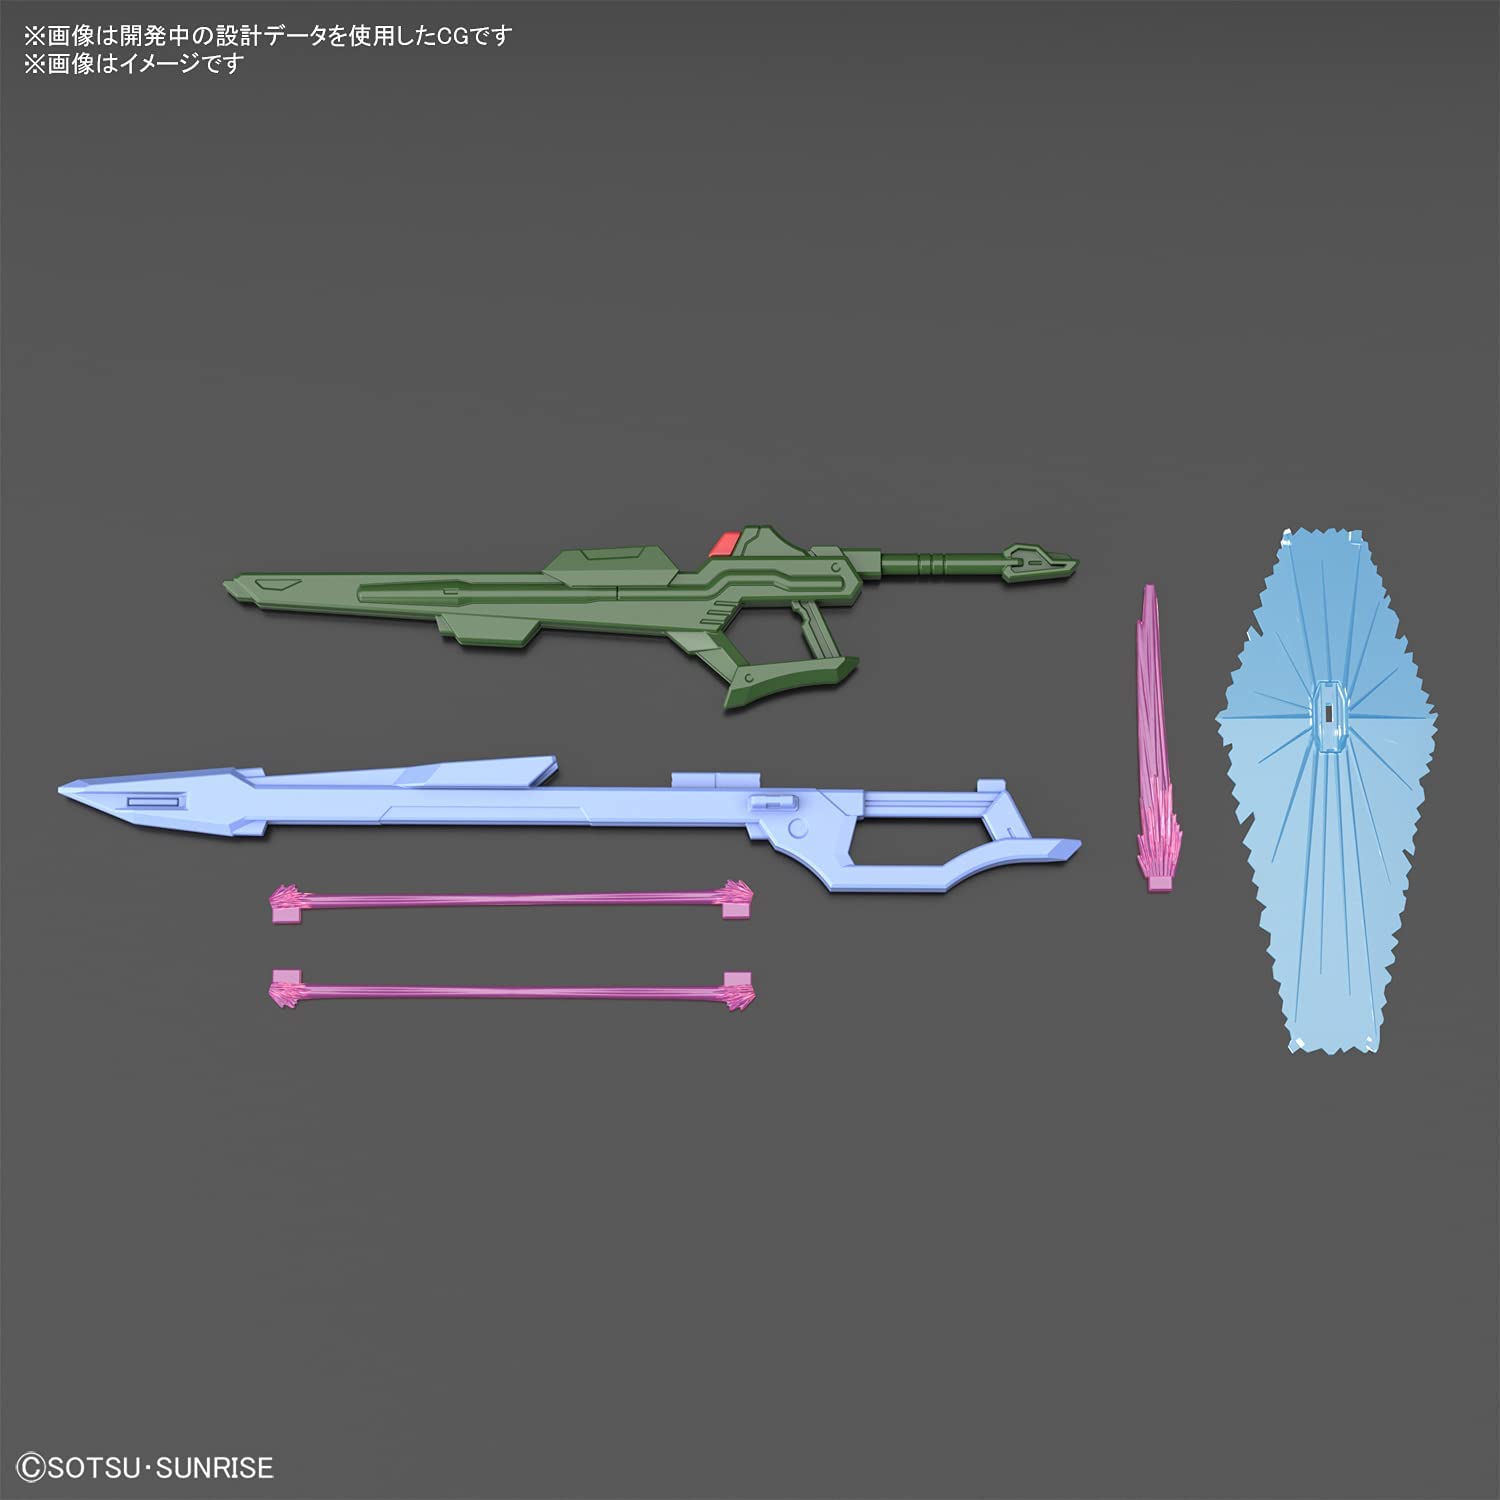 Gundam Marker Ultra Fine Set (6 Markers)